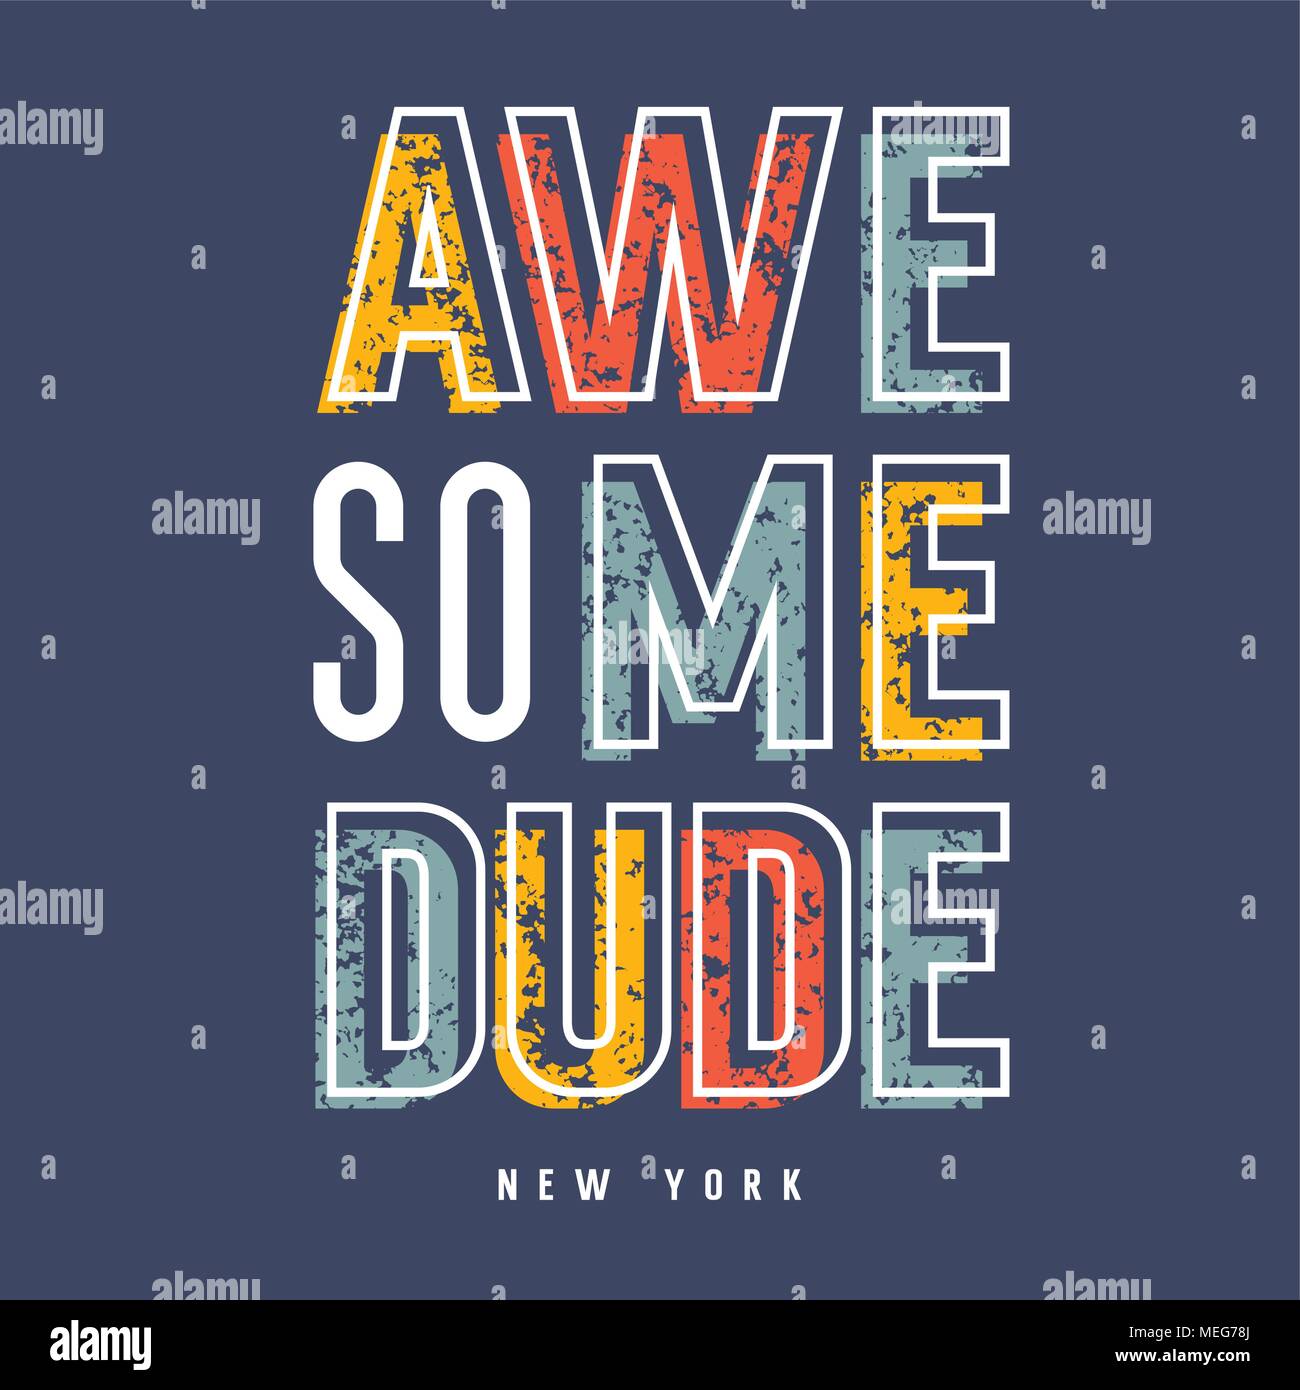 new york t shirt printing company